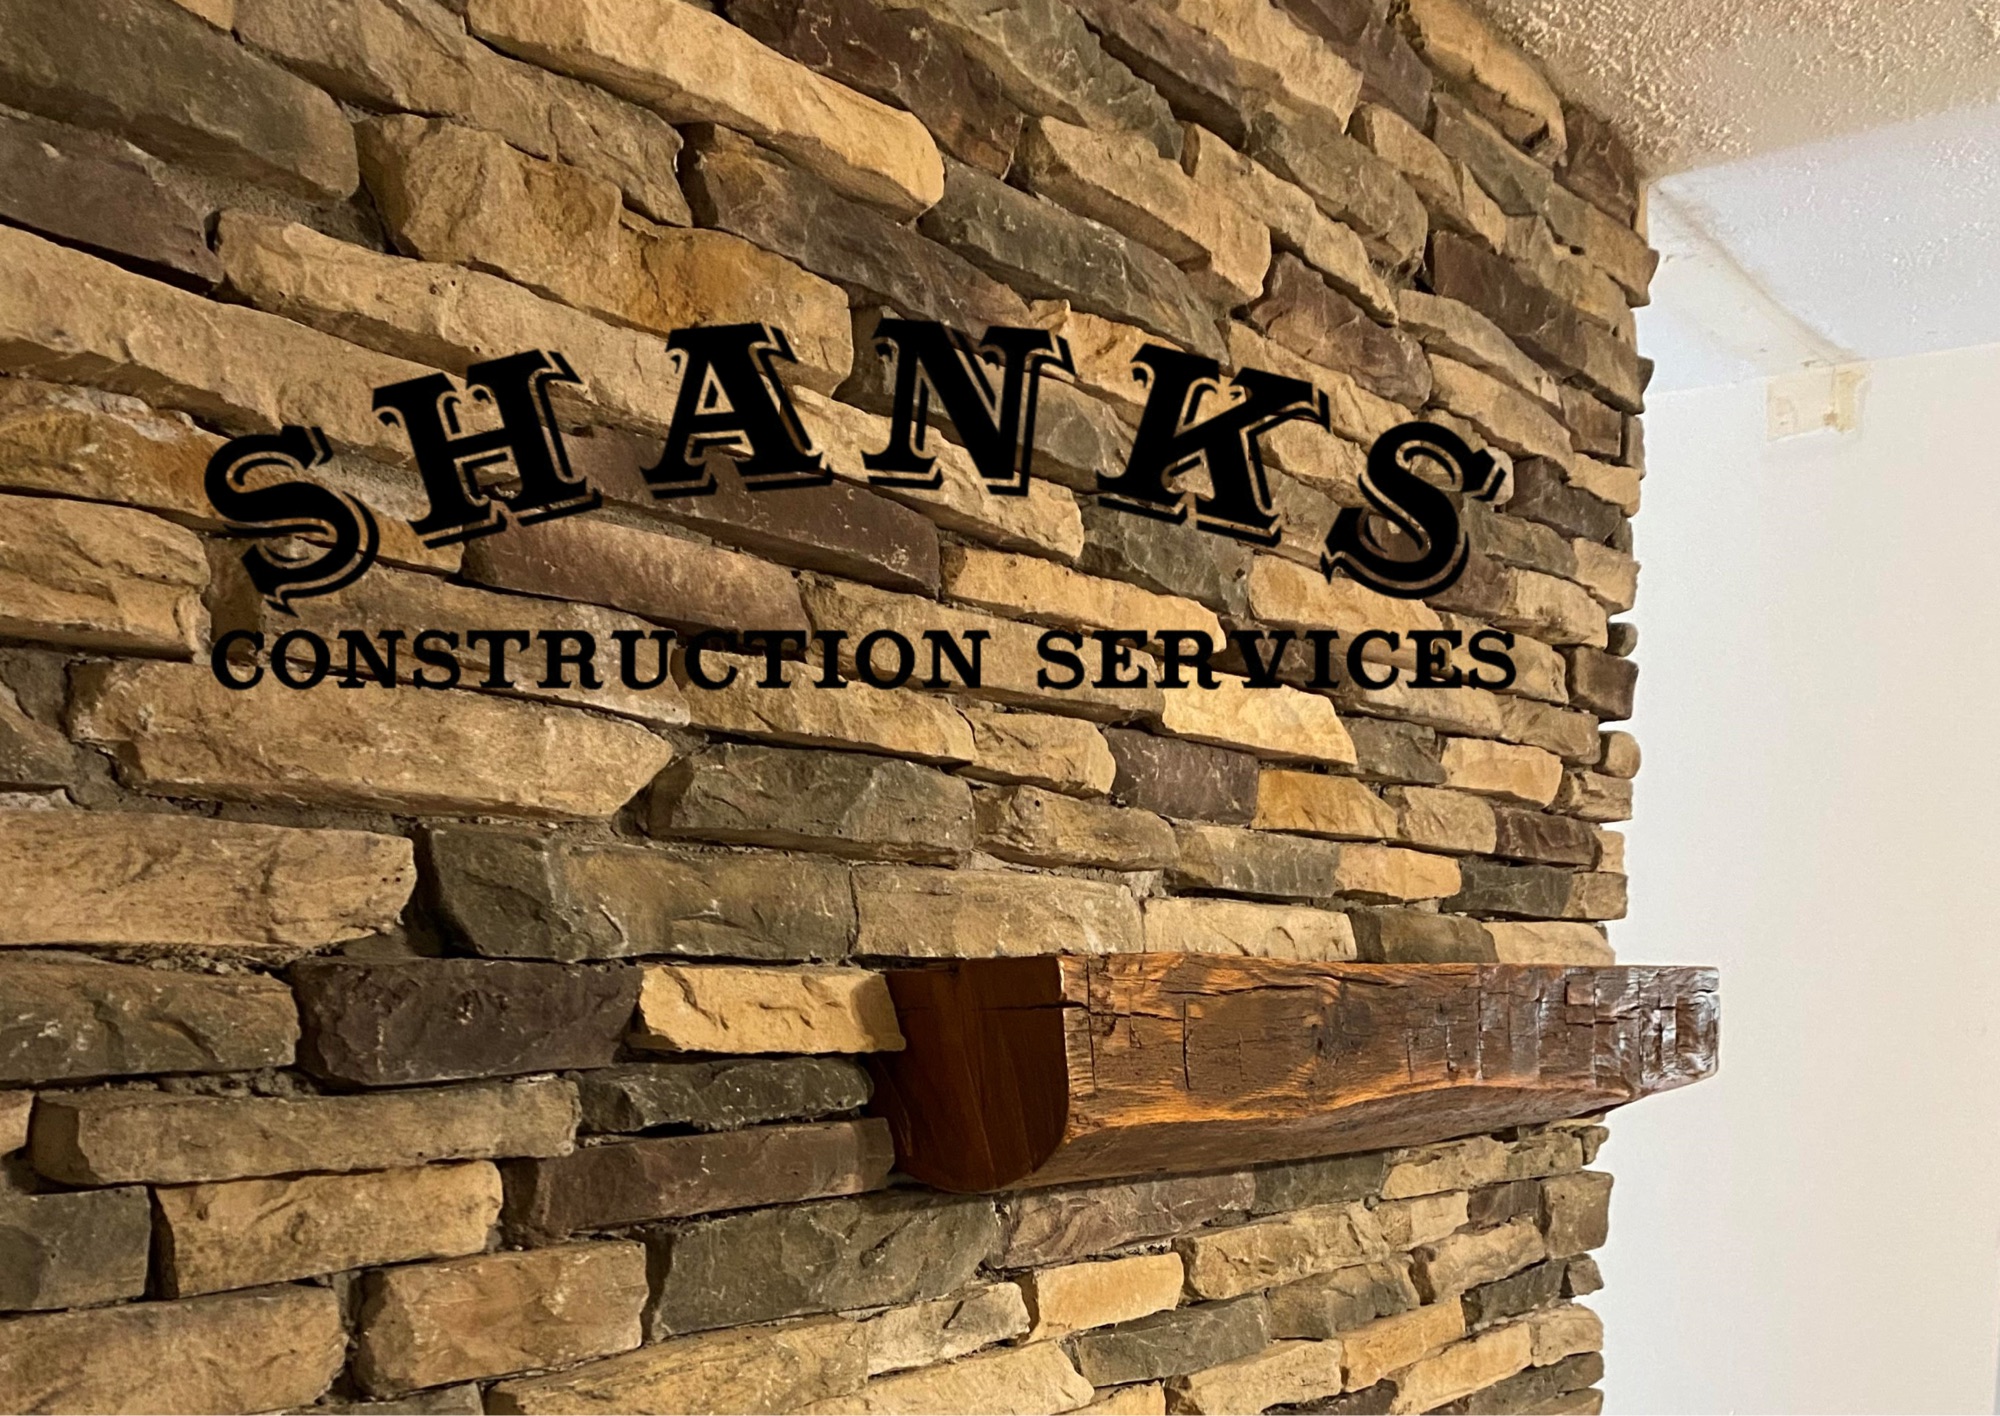 Shanks Construction Services, LLC Logo